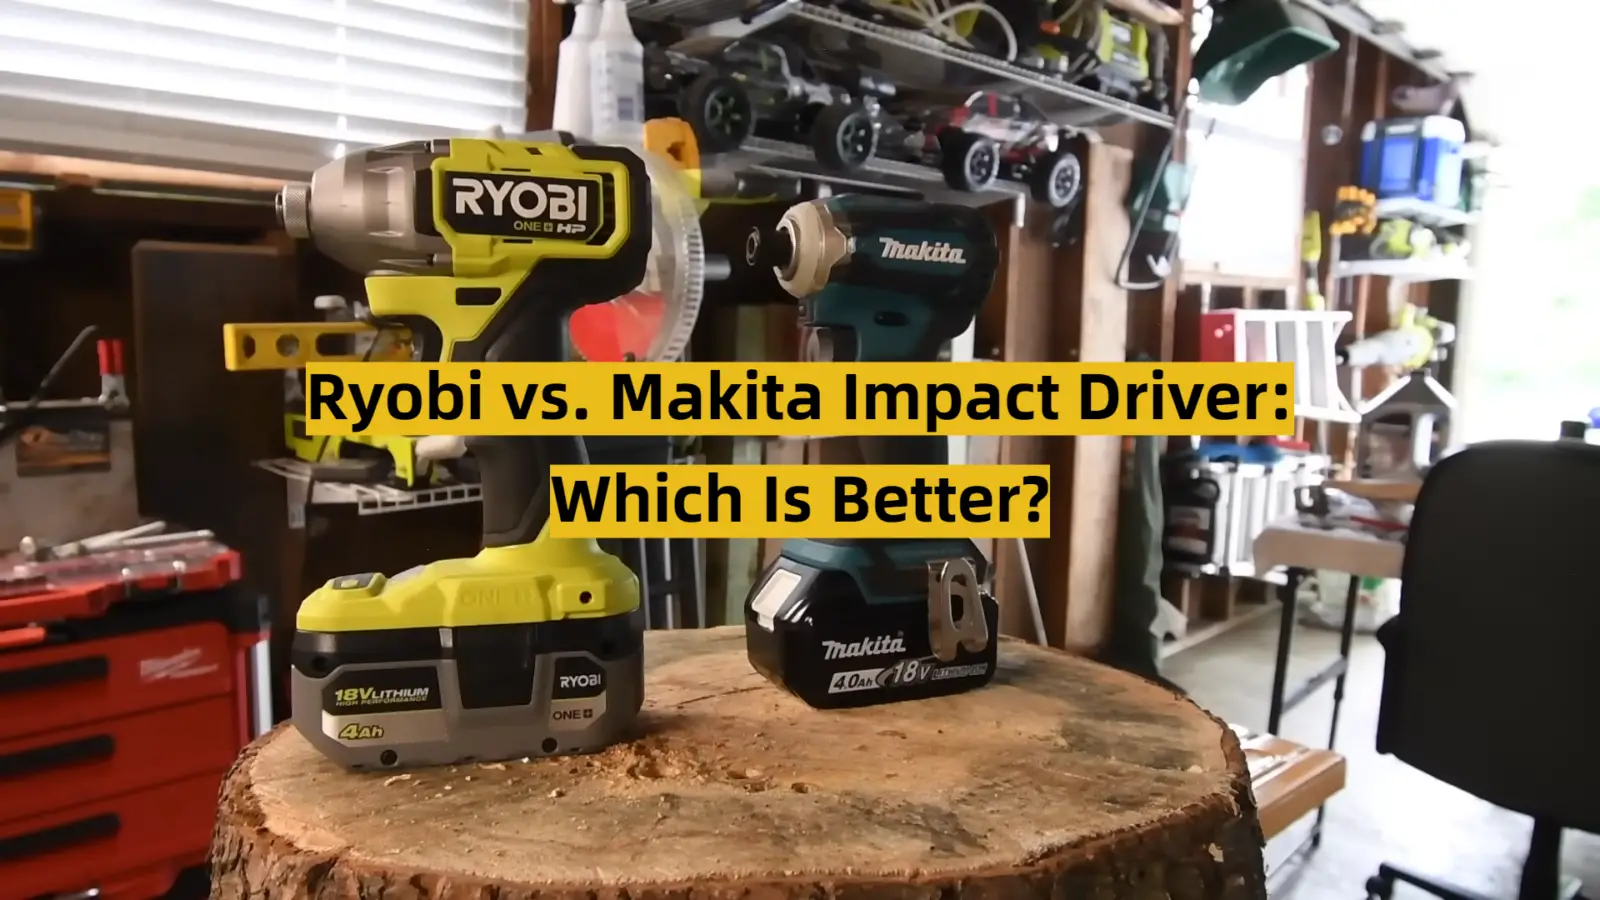 Ryobi vs. Makita Impact Driver: Which Is Better?